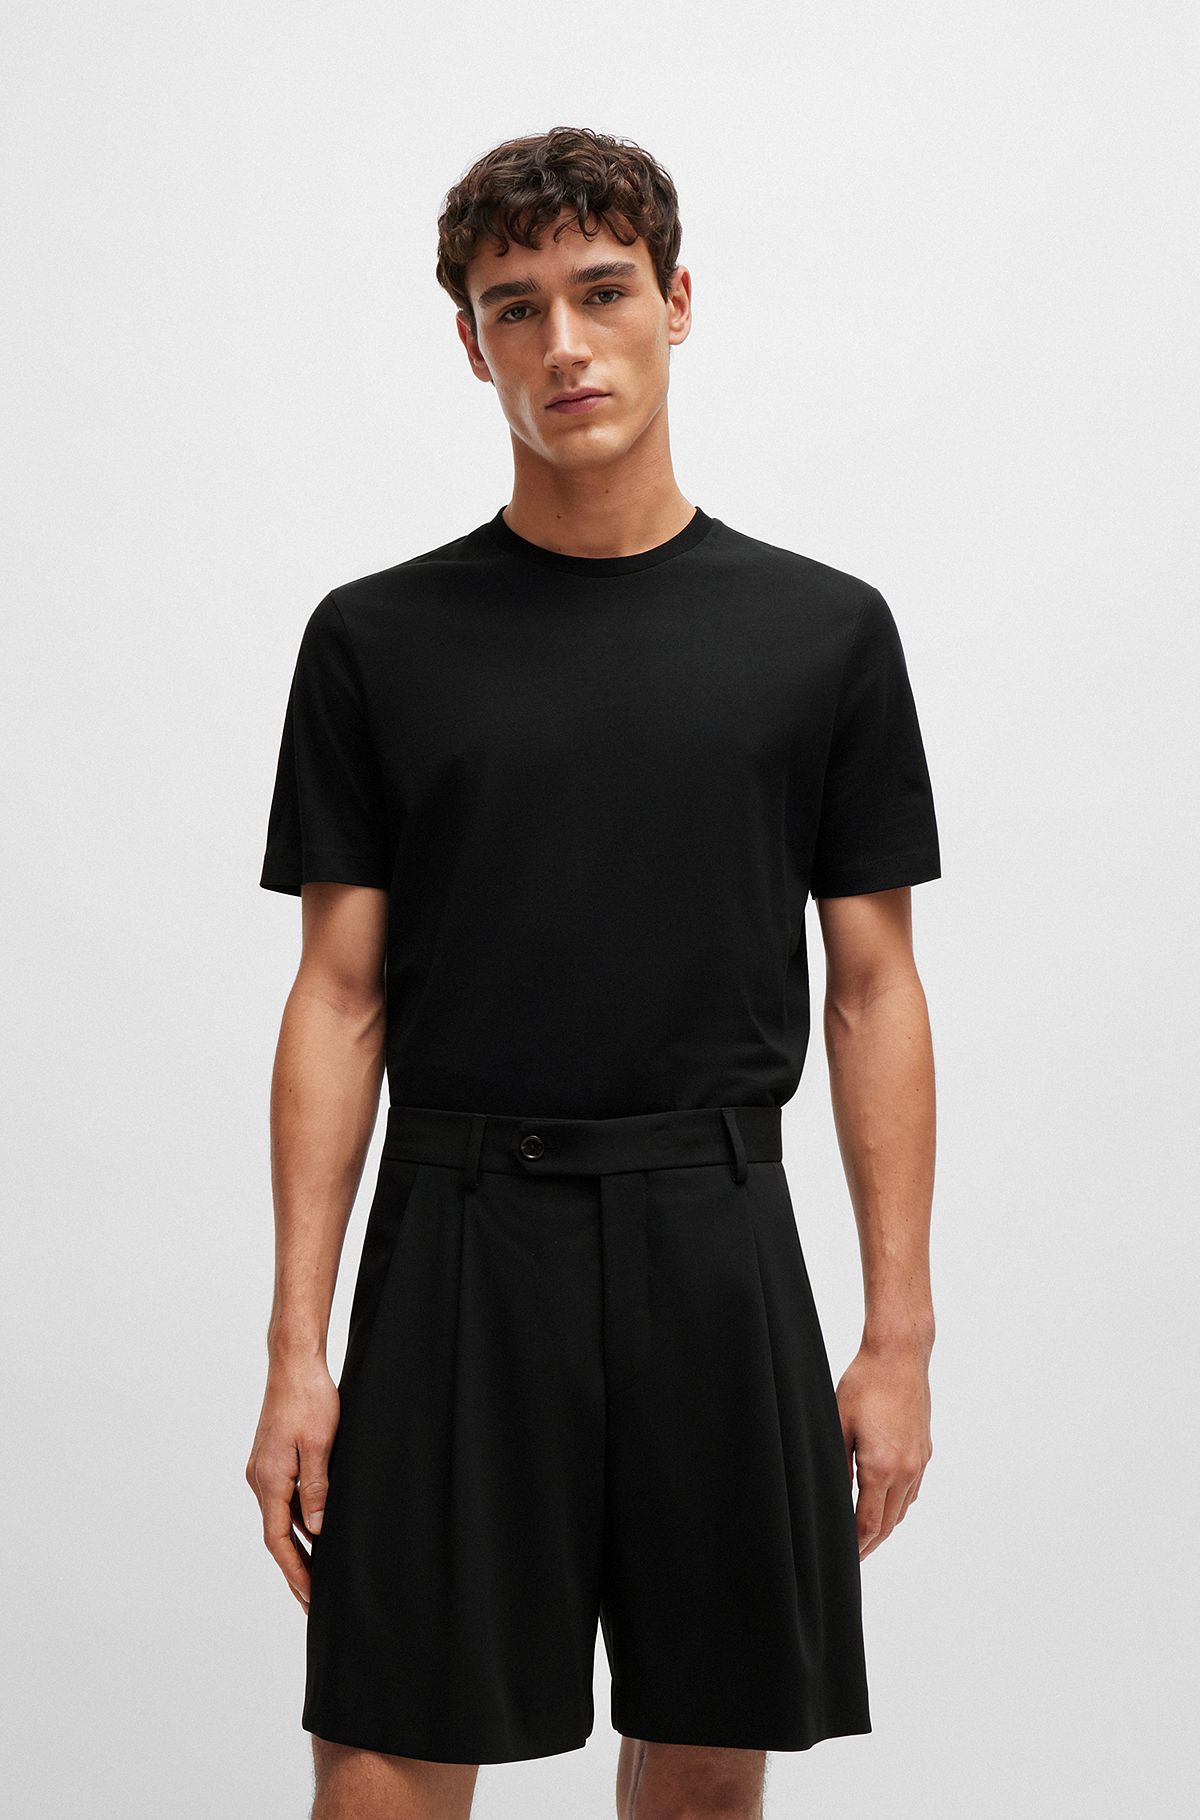 Cotton-jersey T-shirt in a regular fit, Black